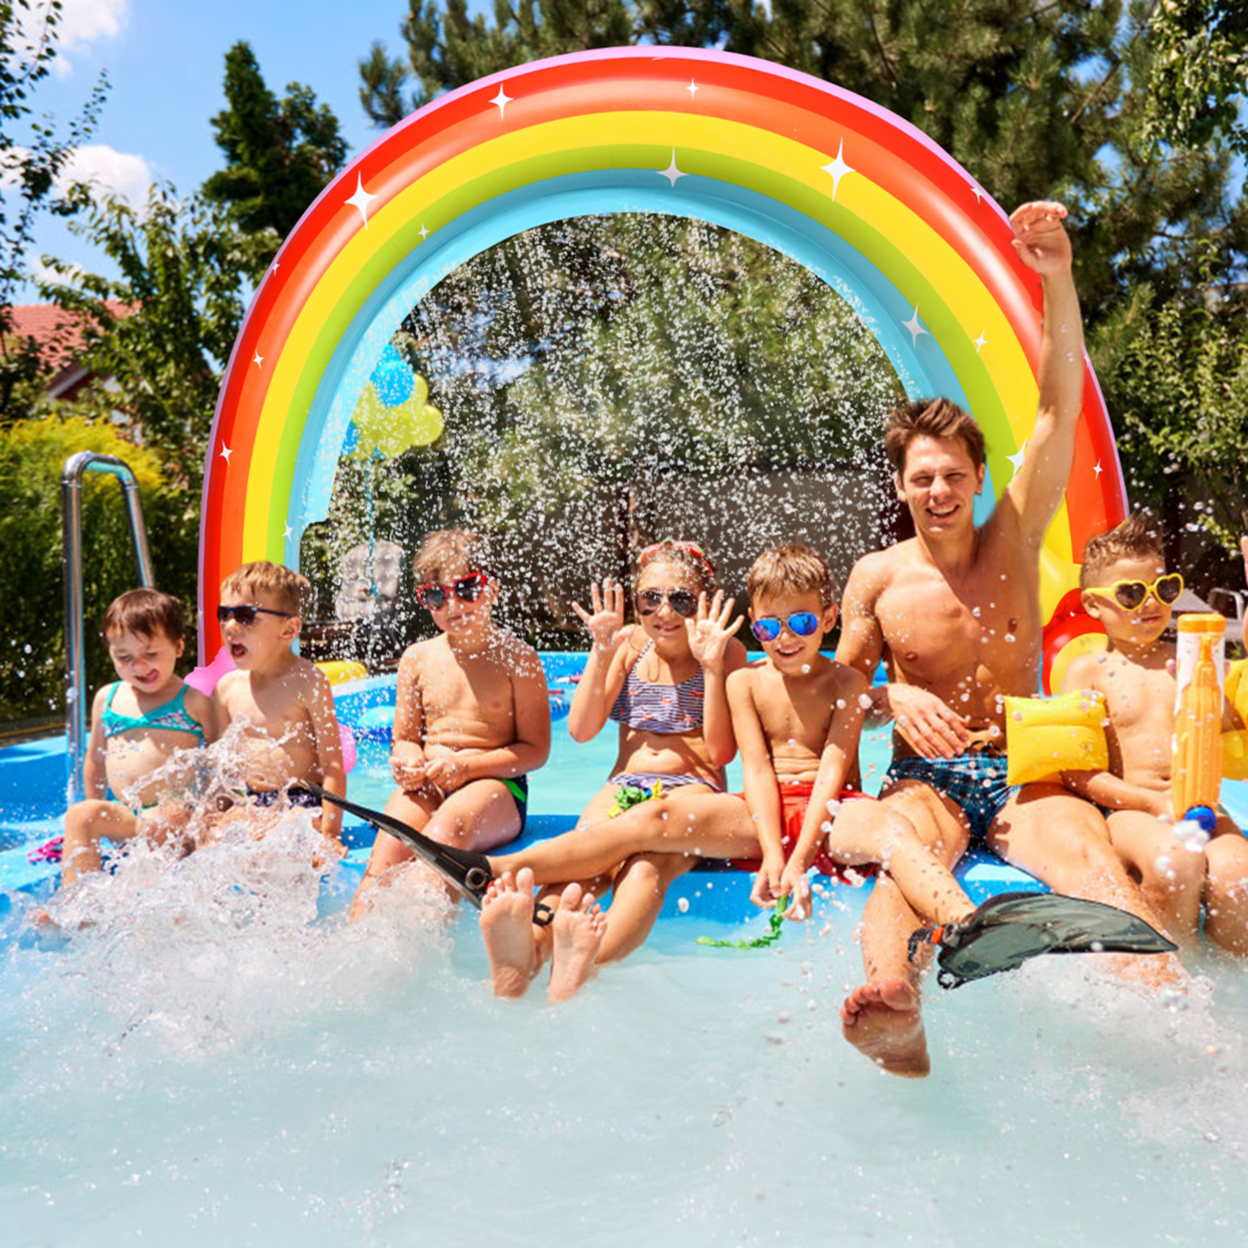 Inflatable Rainbow Sprinkler Outdoor Water Toy Summer Game Garden Yard